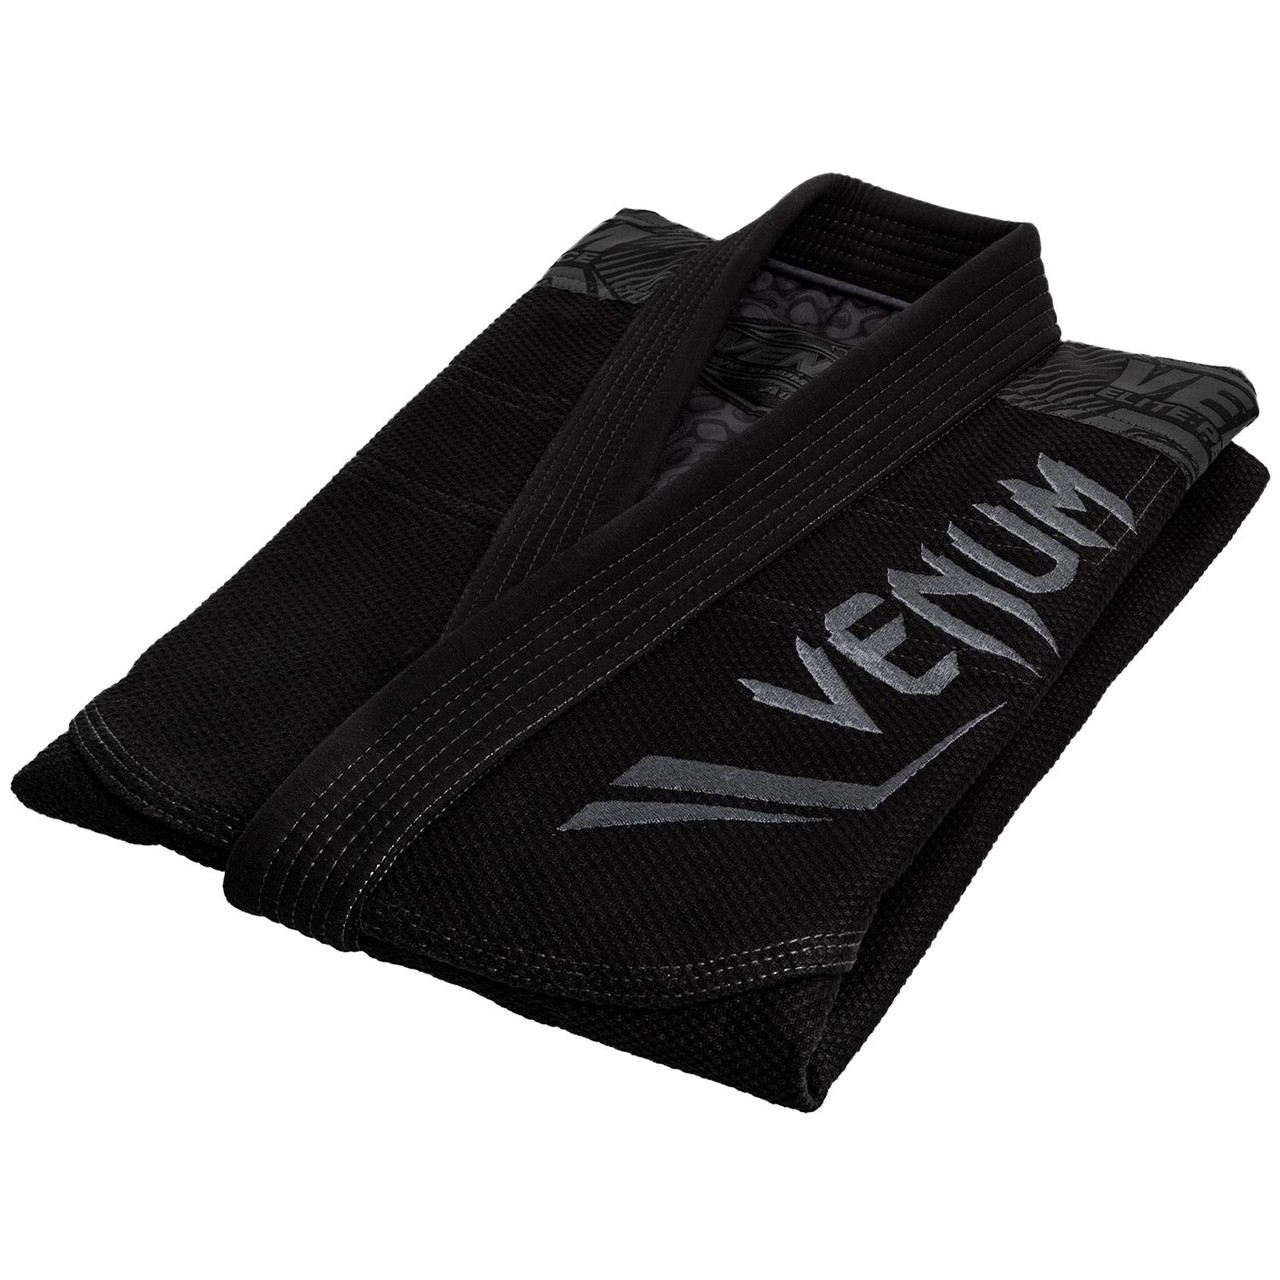 Folded gi of the Venum Elite BJJ GI in Black on black  is now available at www.thejiujitsushop.com

Enjoy Free Shipping from The Jiu Jitsu Shop today! 